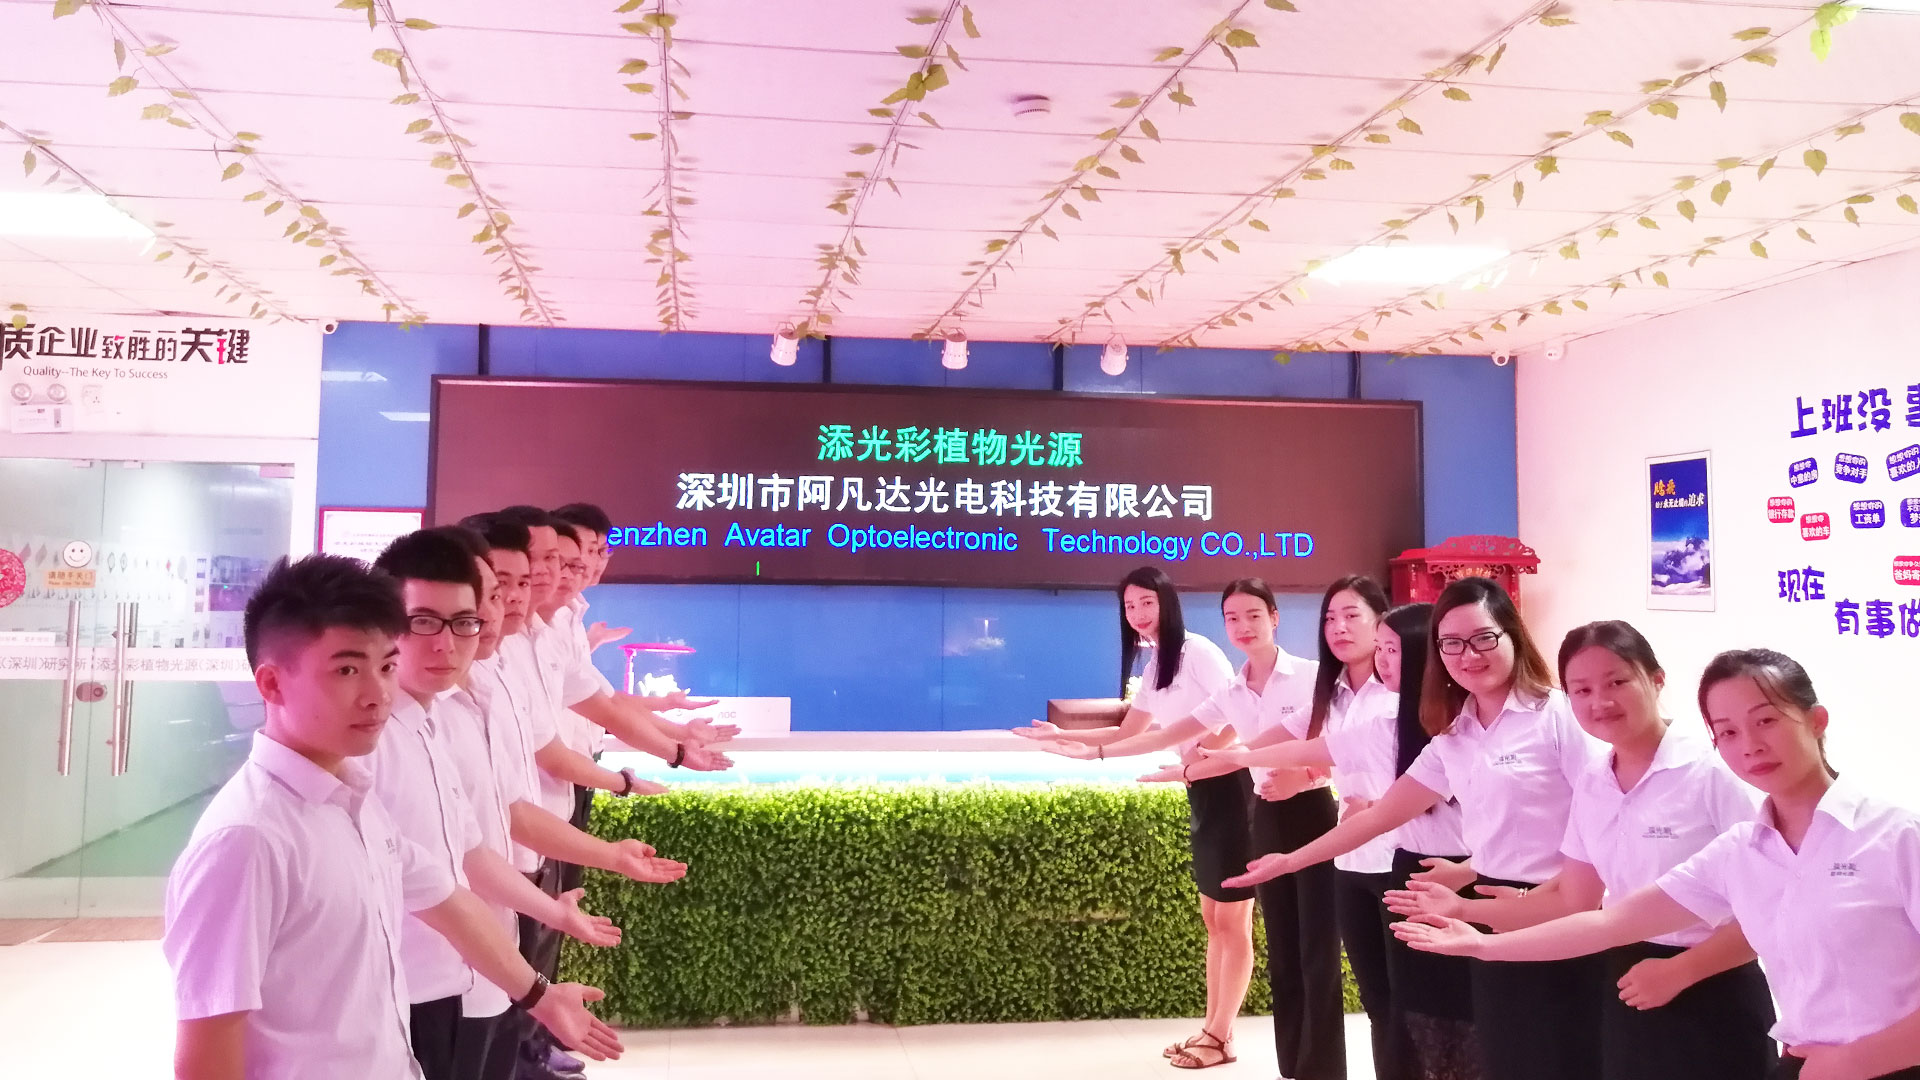 Hot selling led-plantengroeilampen en hydrocultuur kweeksysteem van Shenzhen Avatar Optoelectronic Technology co., ltd